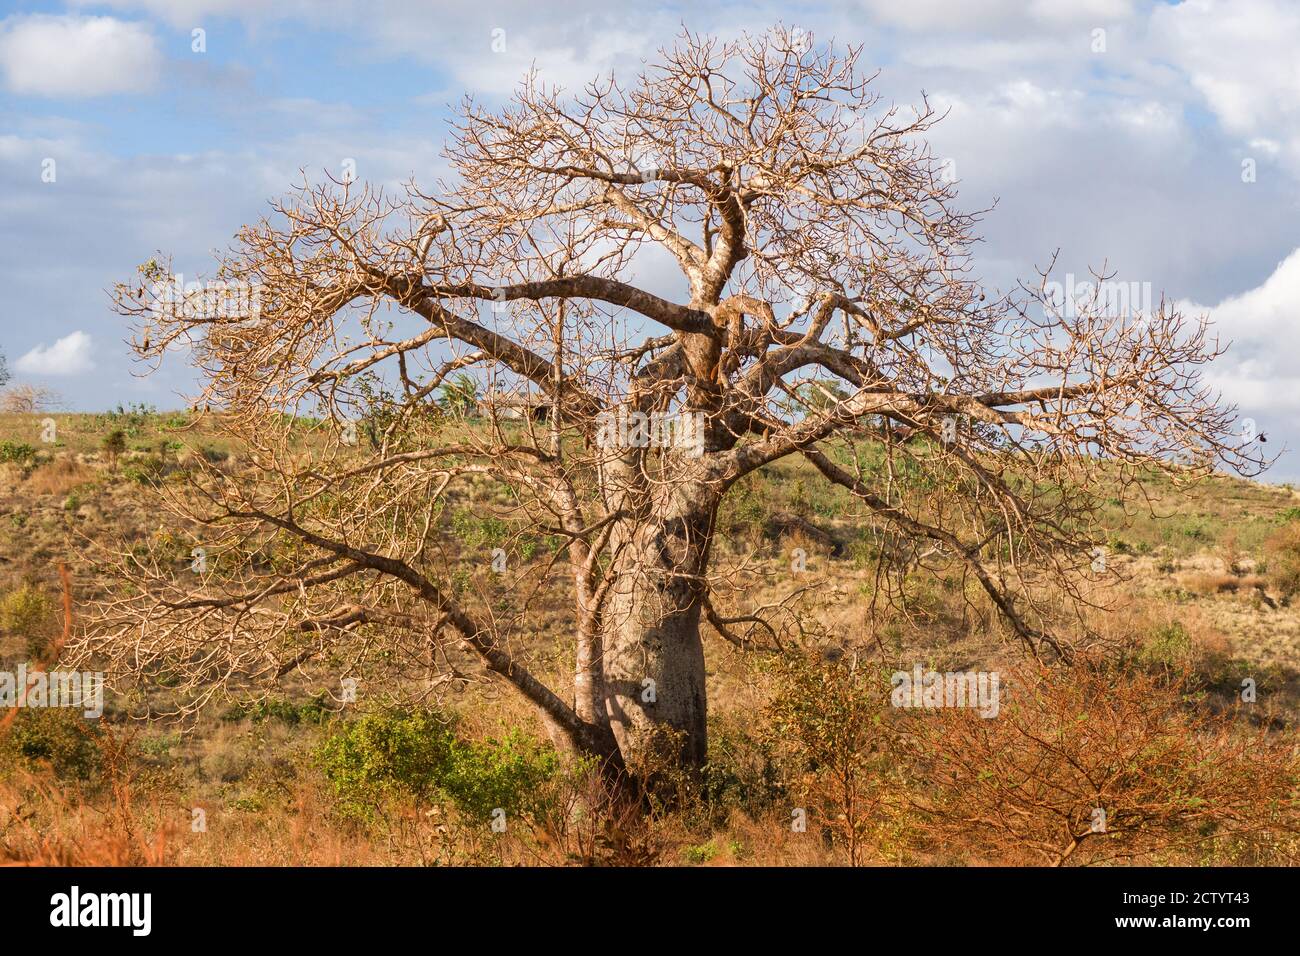 A large baobab tree (Adansonia digitata) in afternoon light, Kenya, East Africa Stock Photo